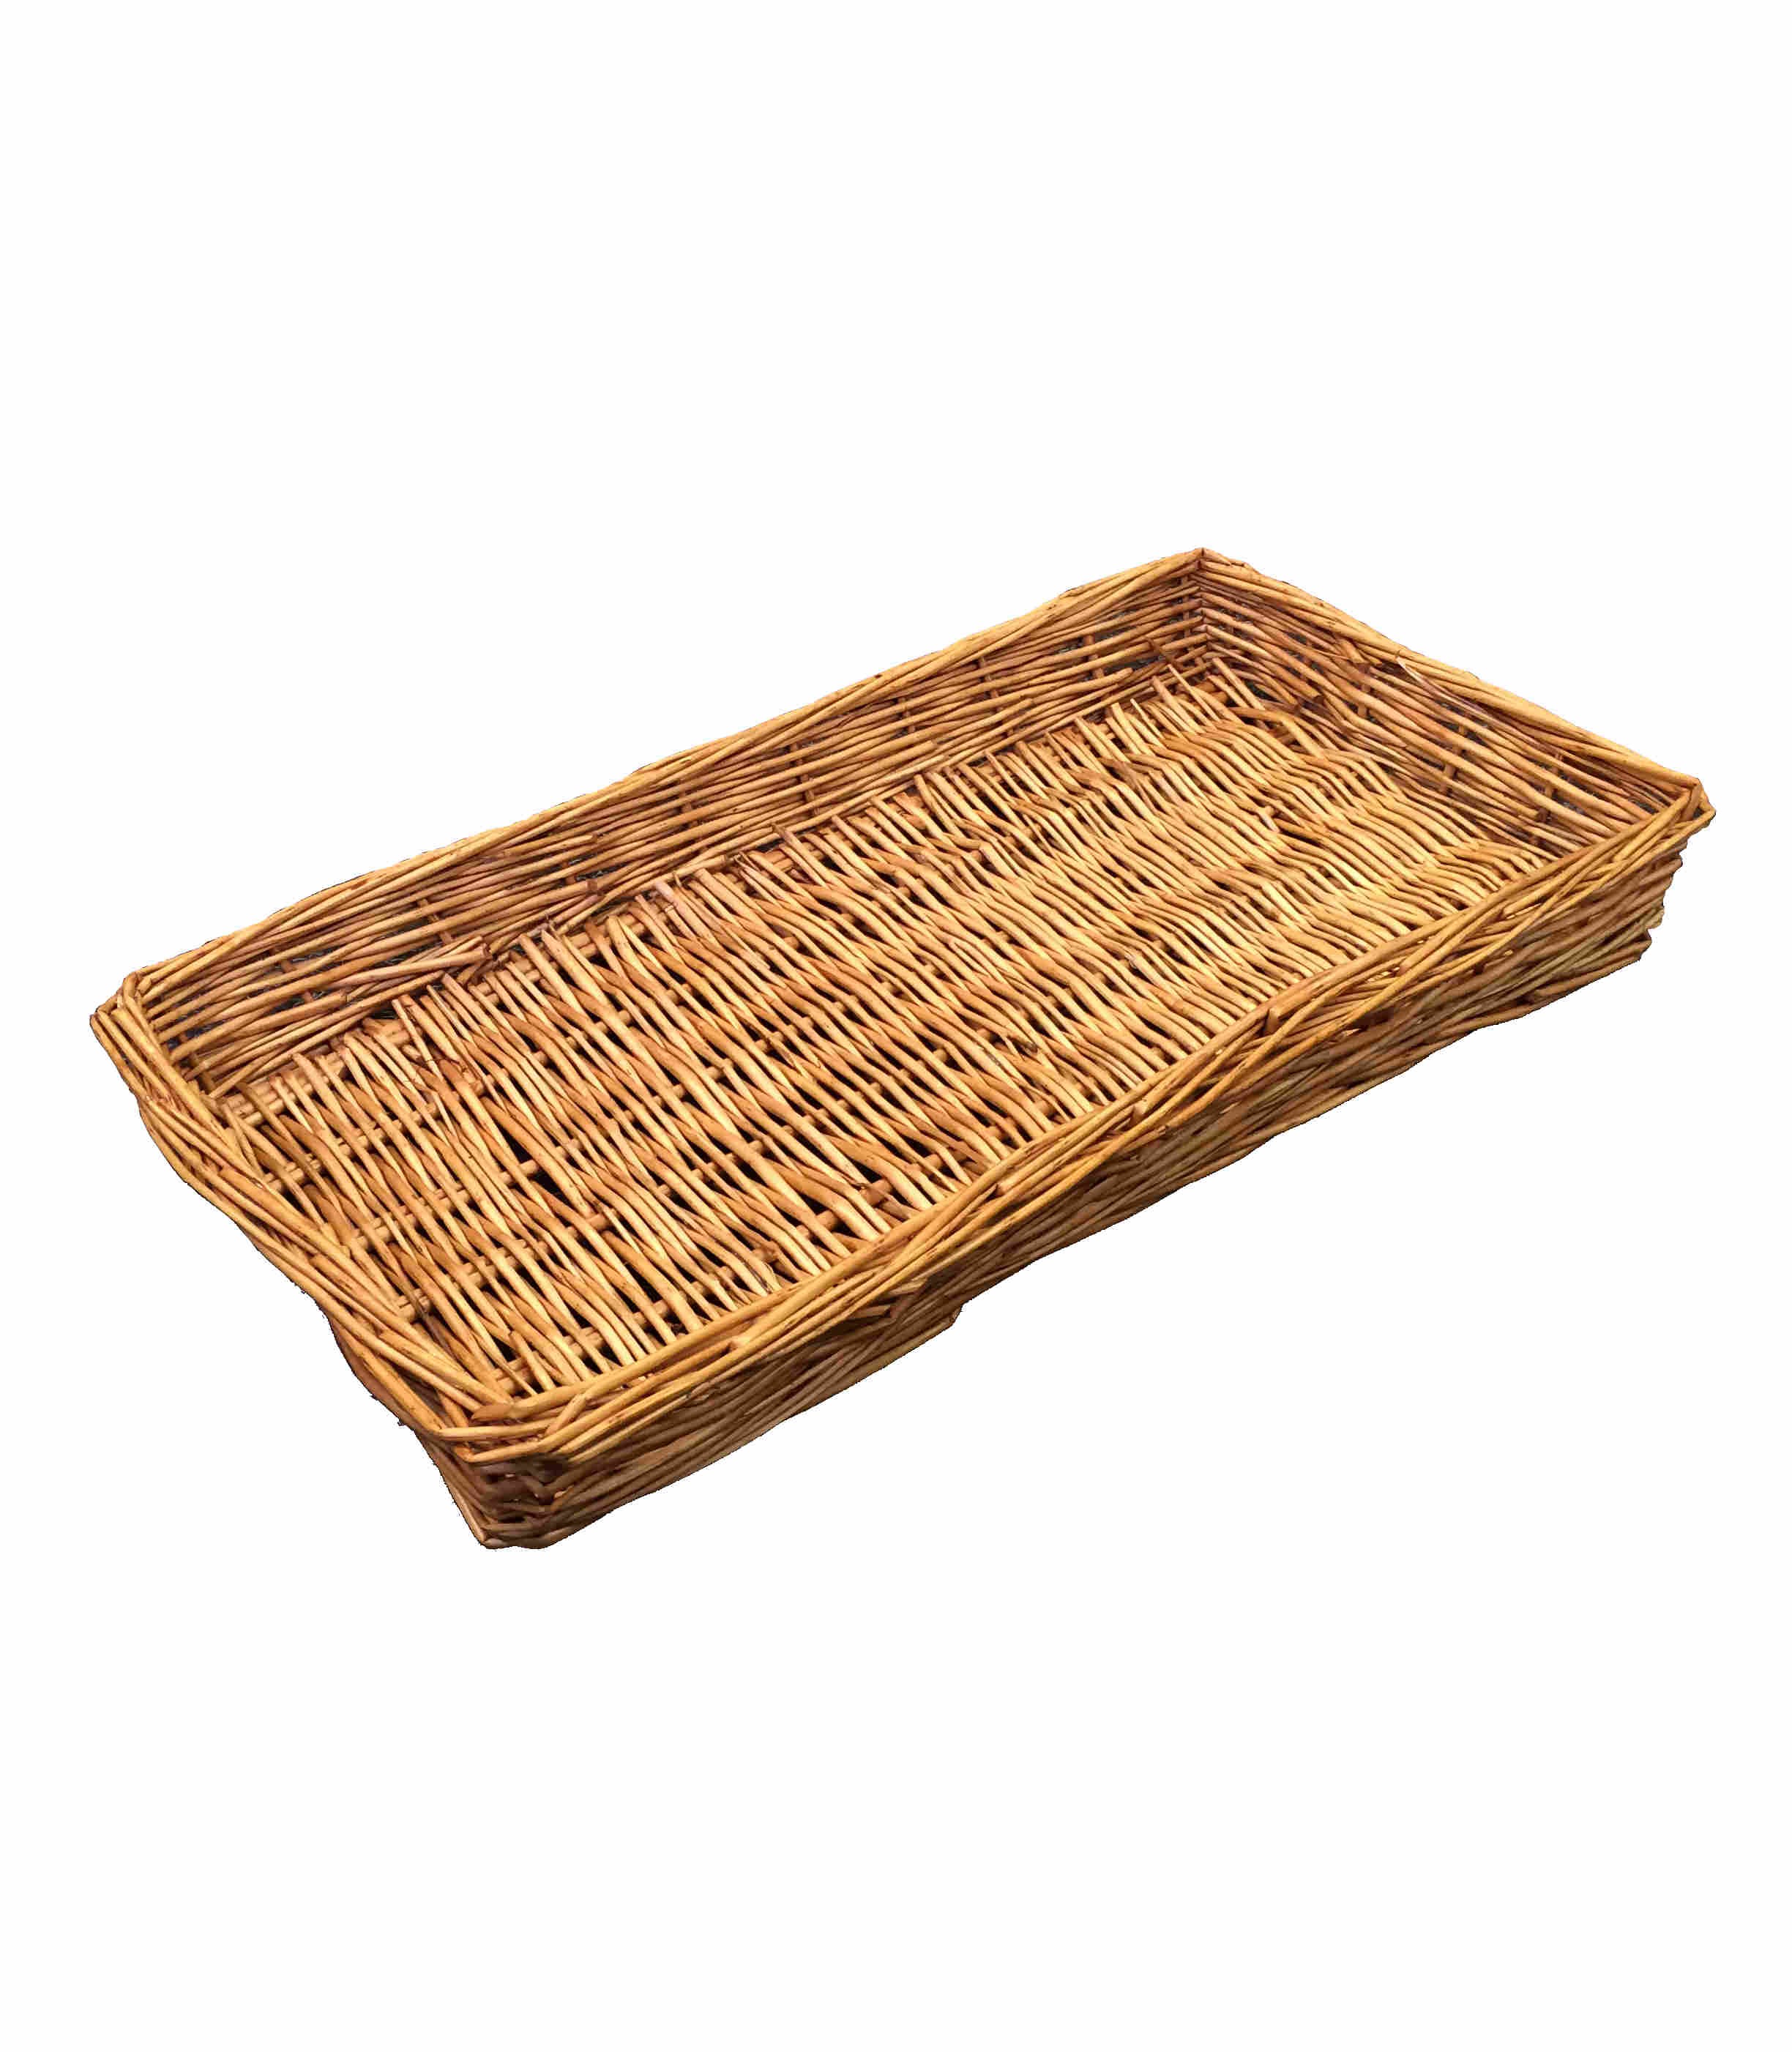 Willow oblong basket